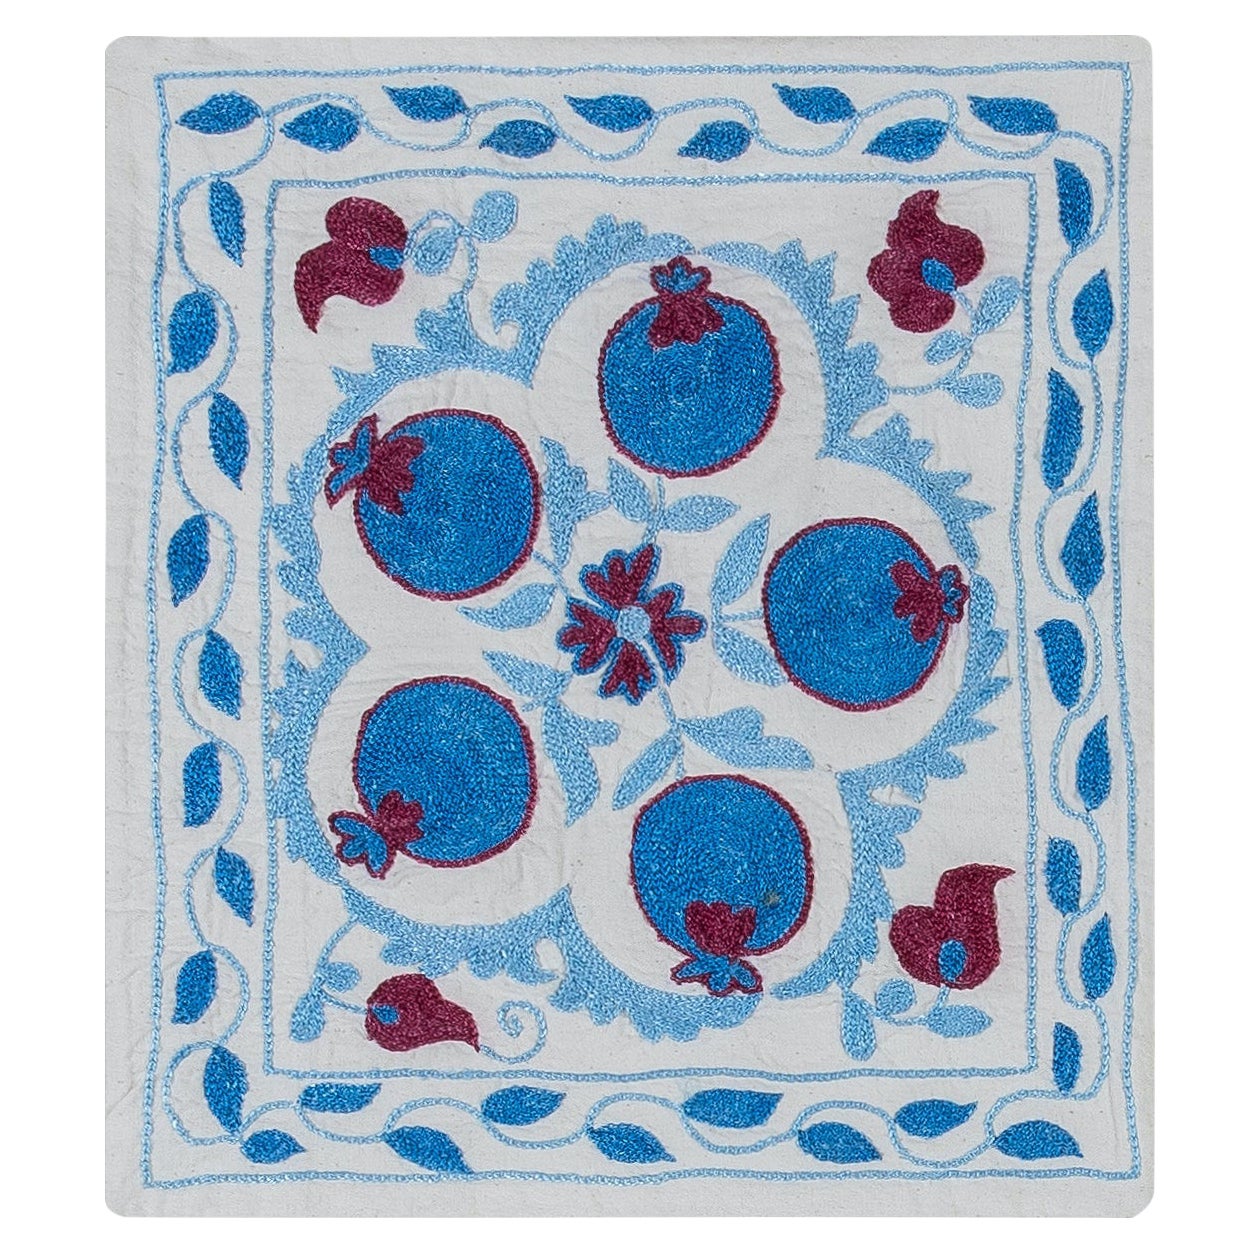 Cream, Blue & Dark Red Silk Embroidery Suzani Textile Lace Pillow Cover For Sale